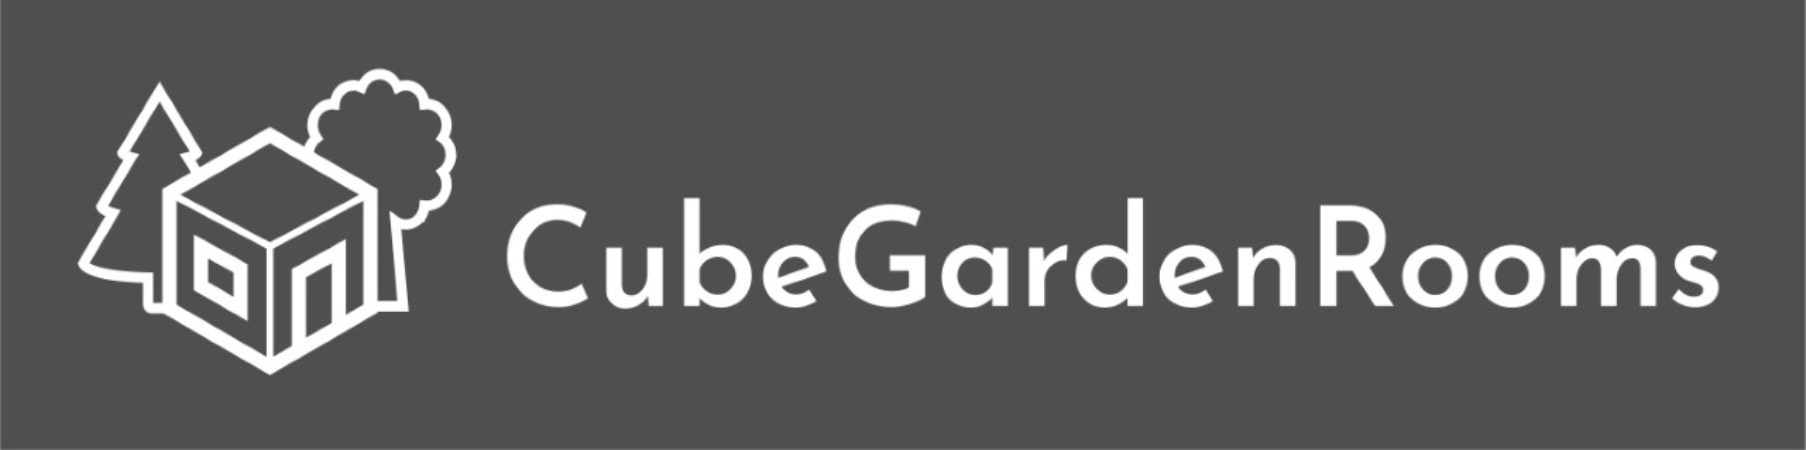 Cube Garden Rooms Ltd